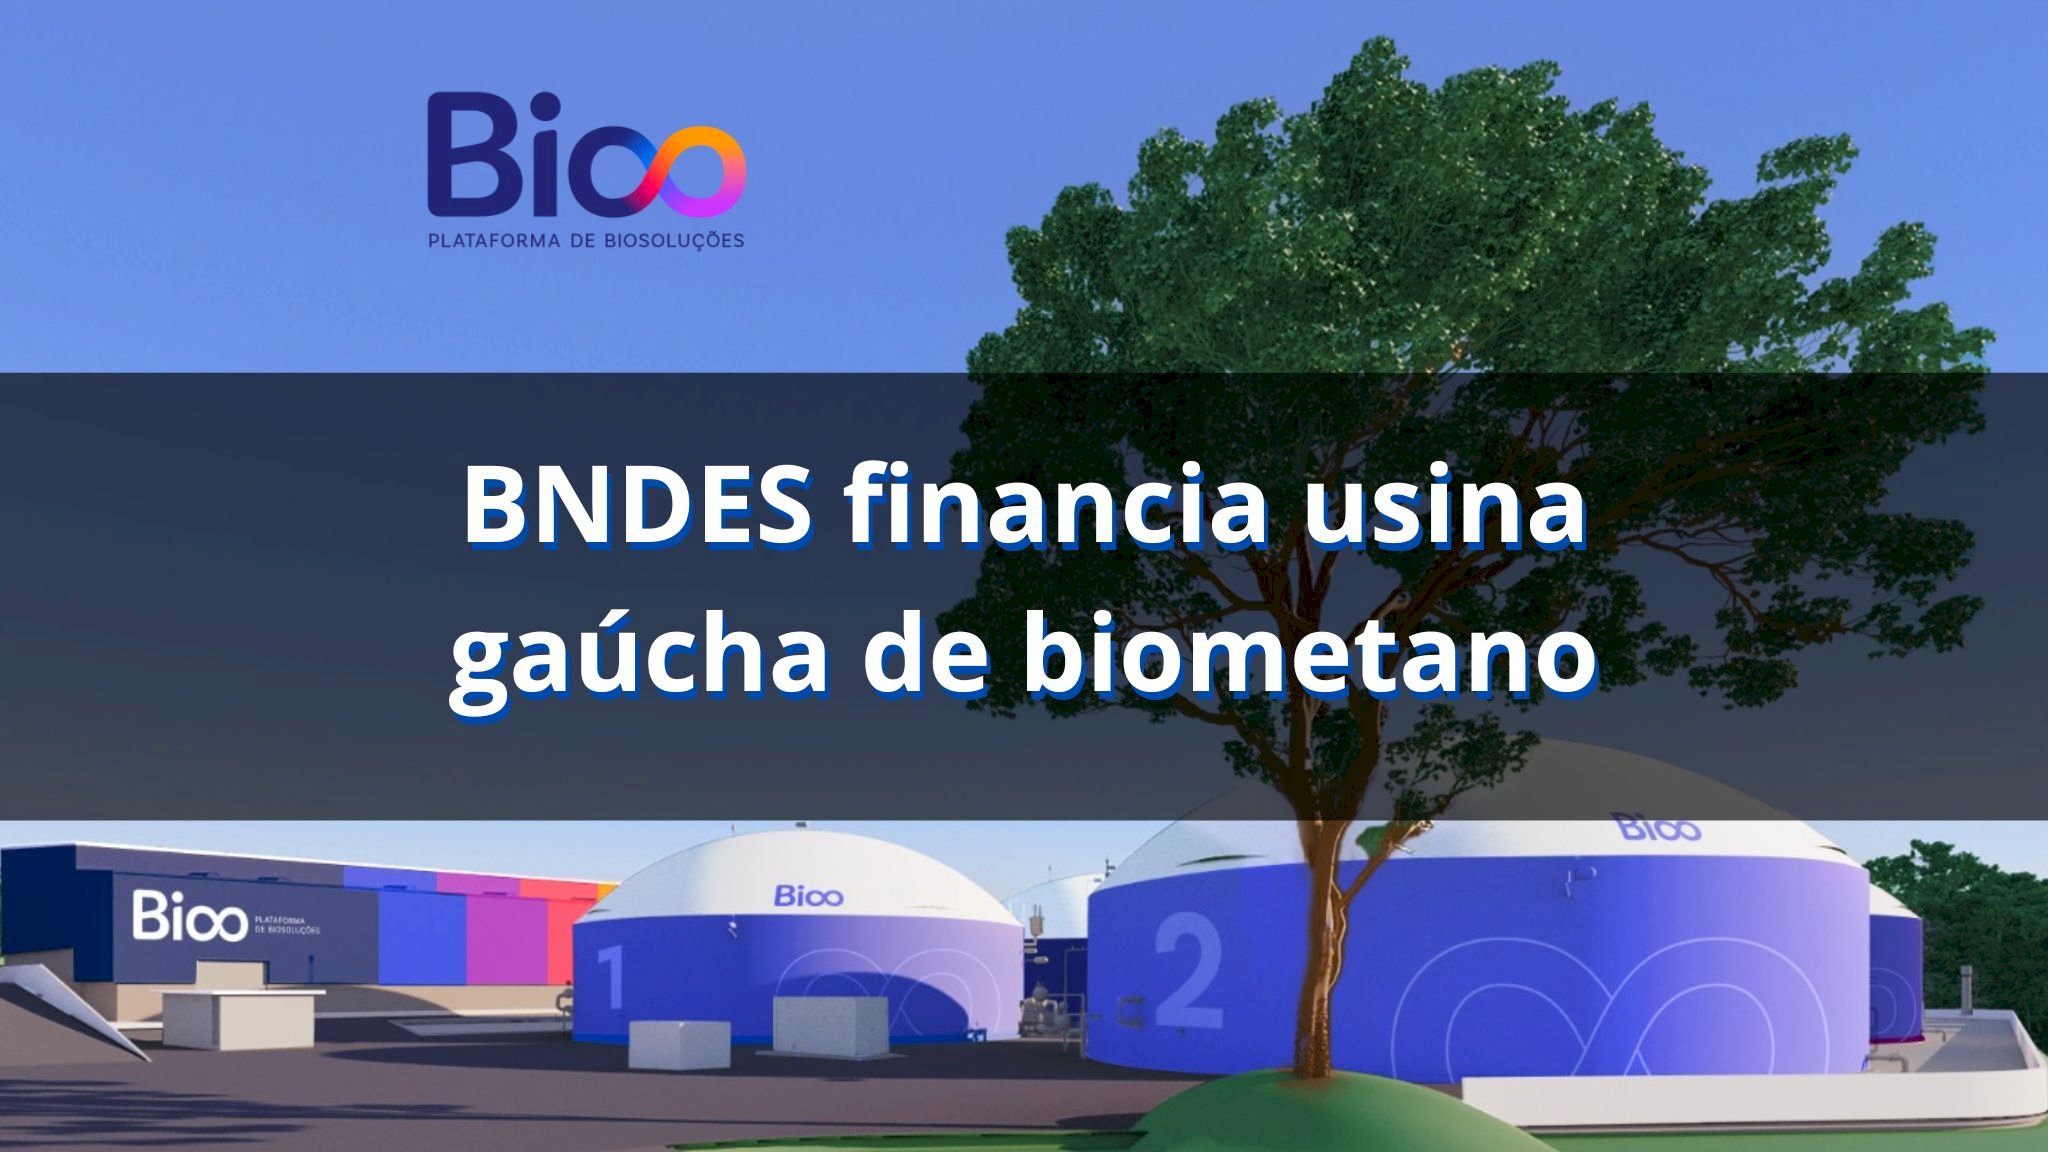 BNDES financia usina gaúcha de biometano